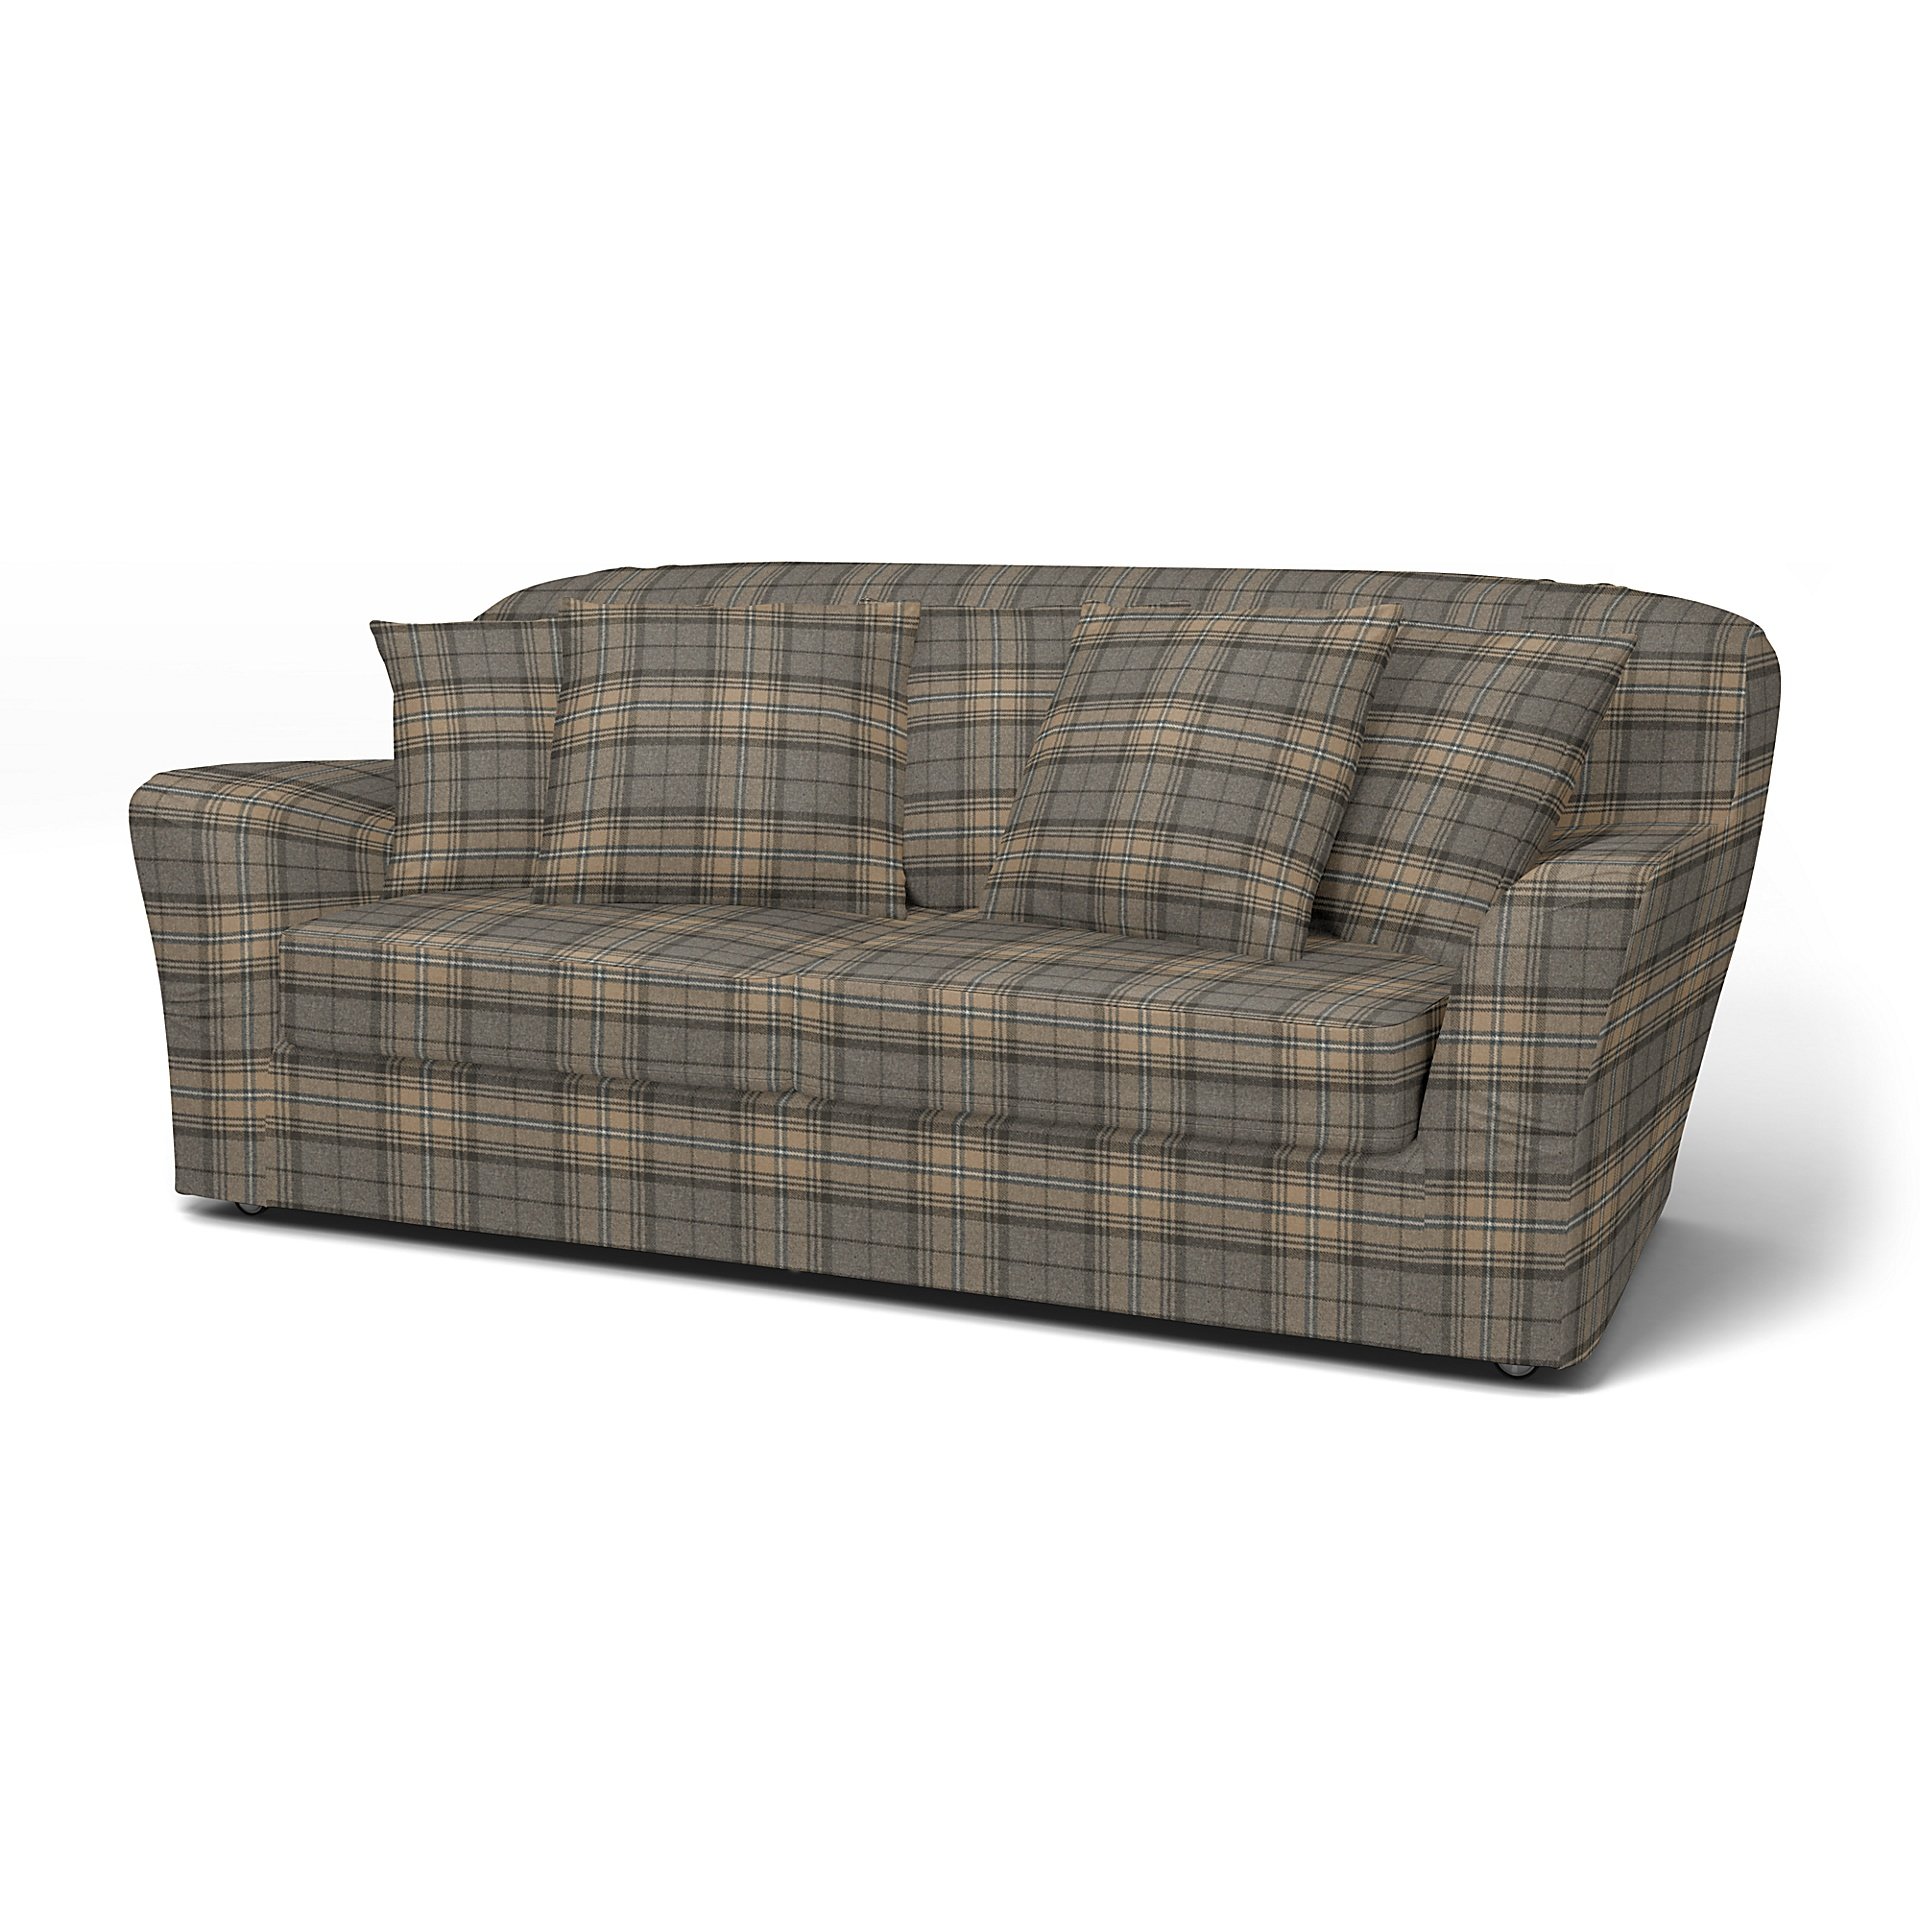 IKEA - Tomelilla sofa bed (Standard model), Bark Brown, Wool - Bemz